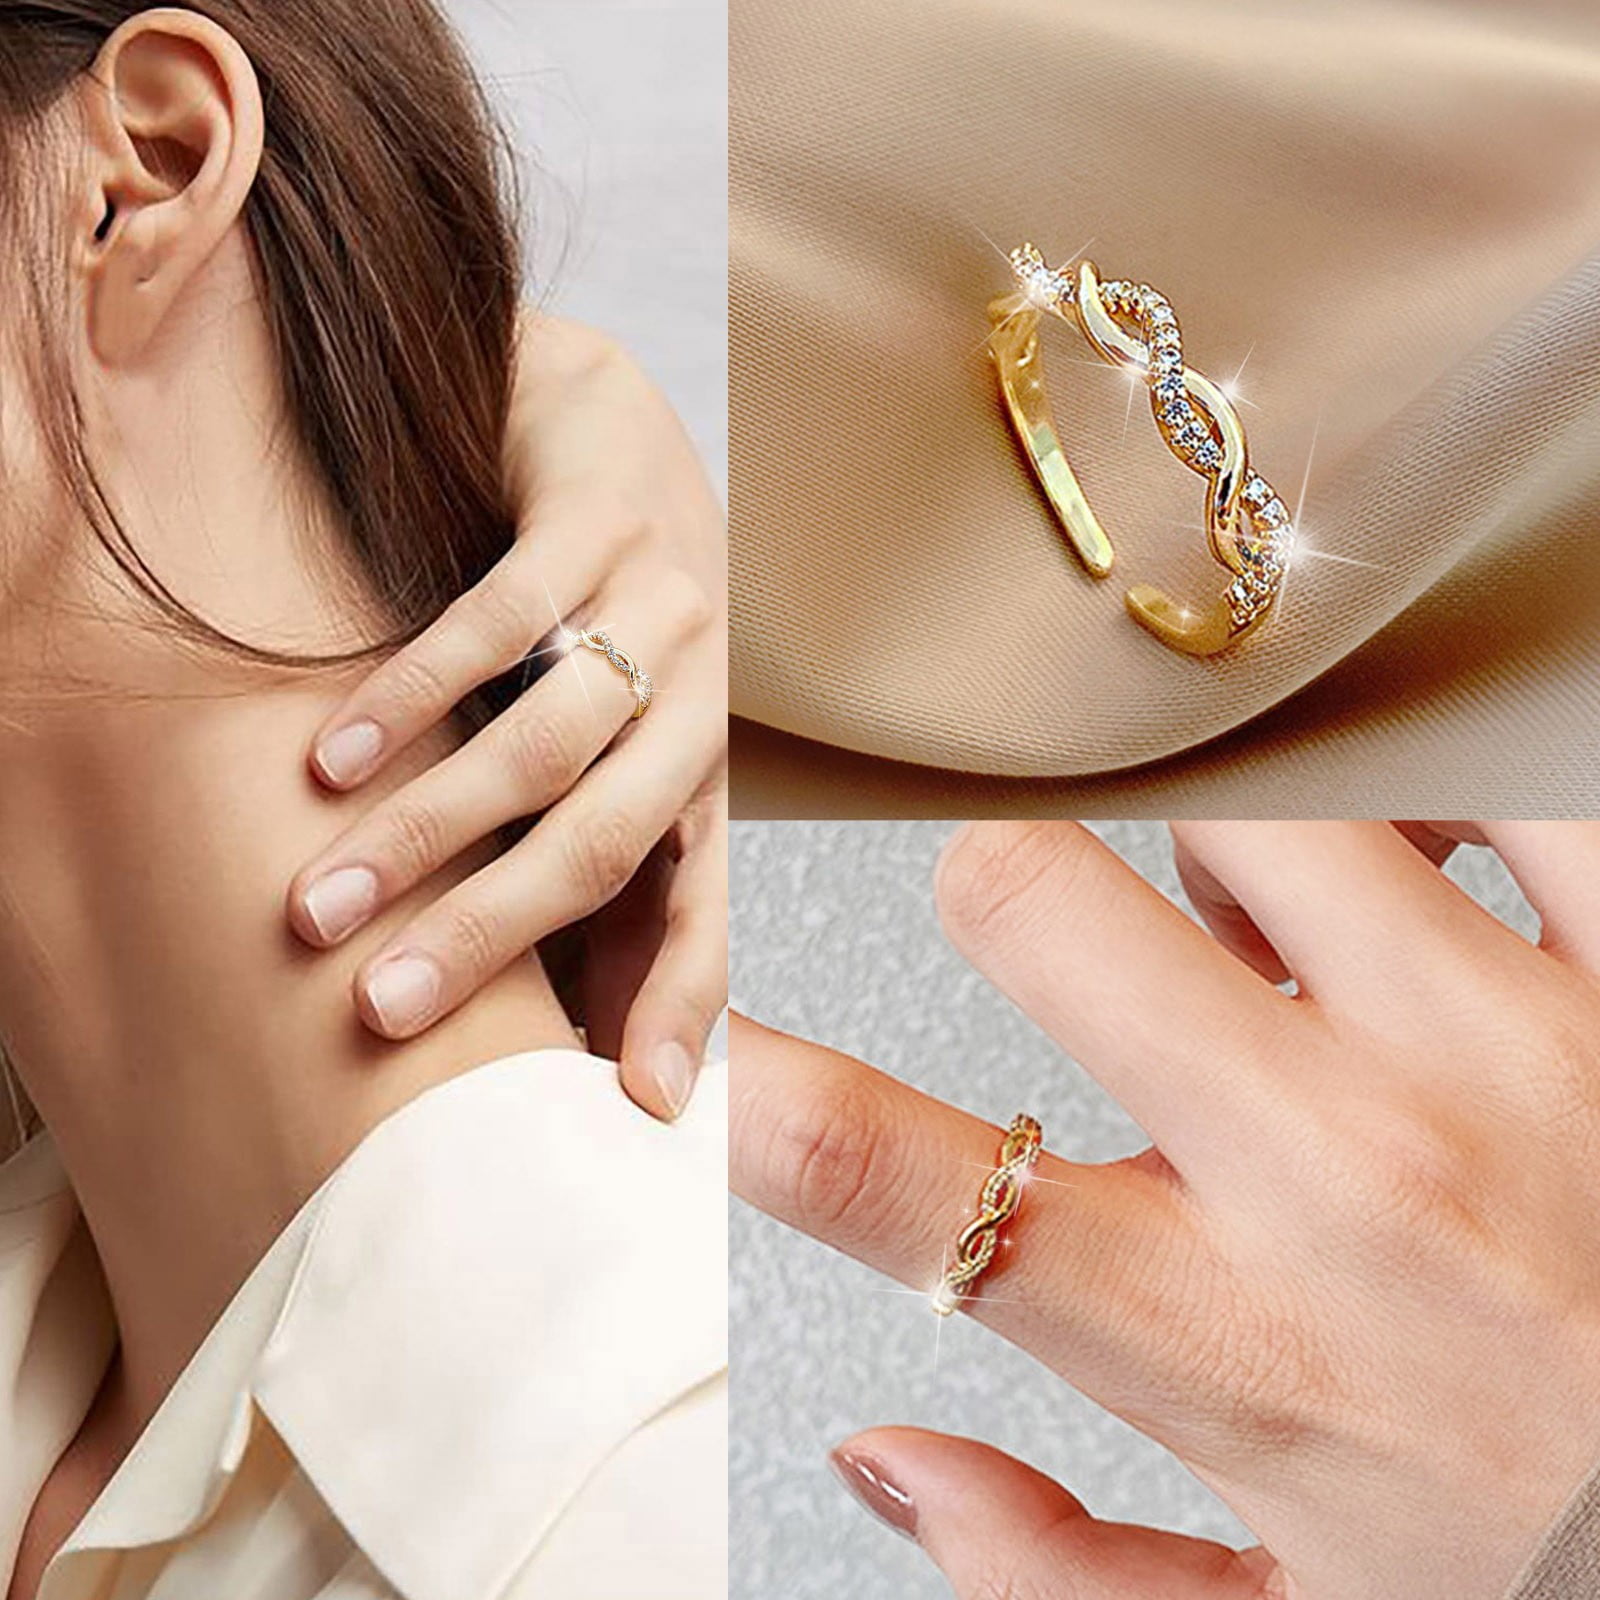 Designer gold ring designs for female | Gold ring designs, Ring design for  female, Gold earrings designs